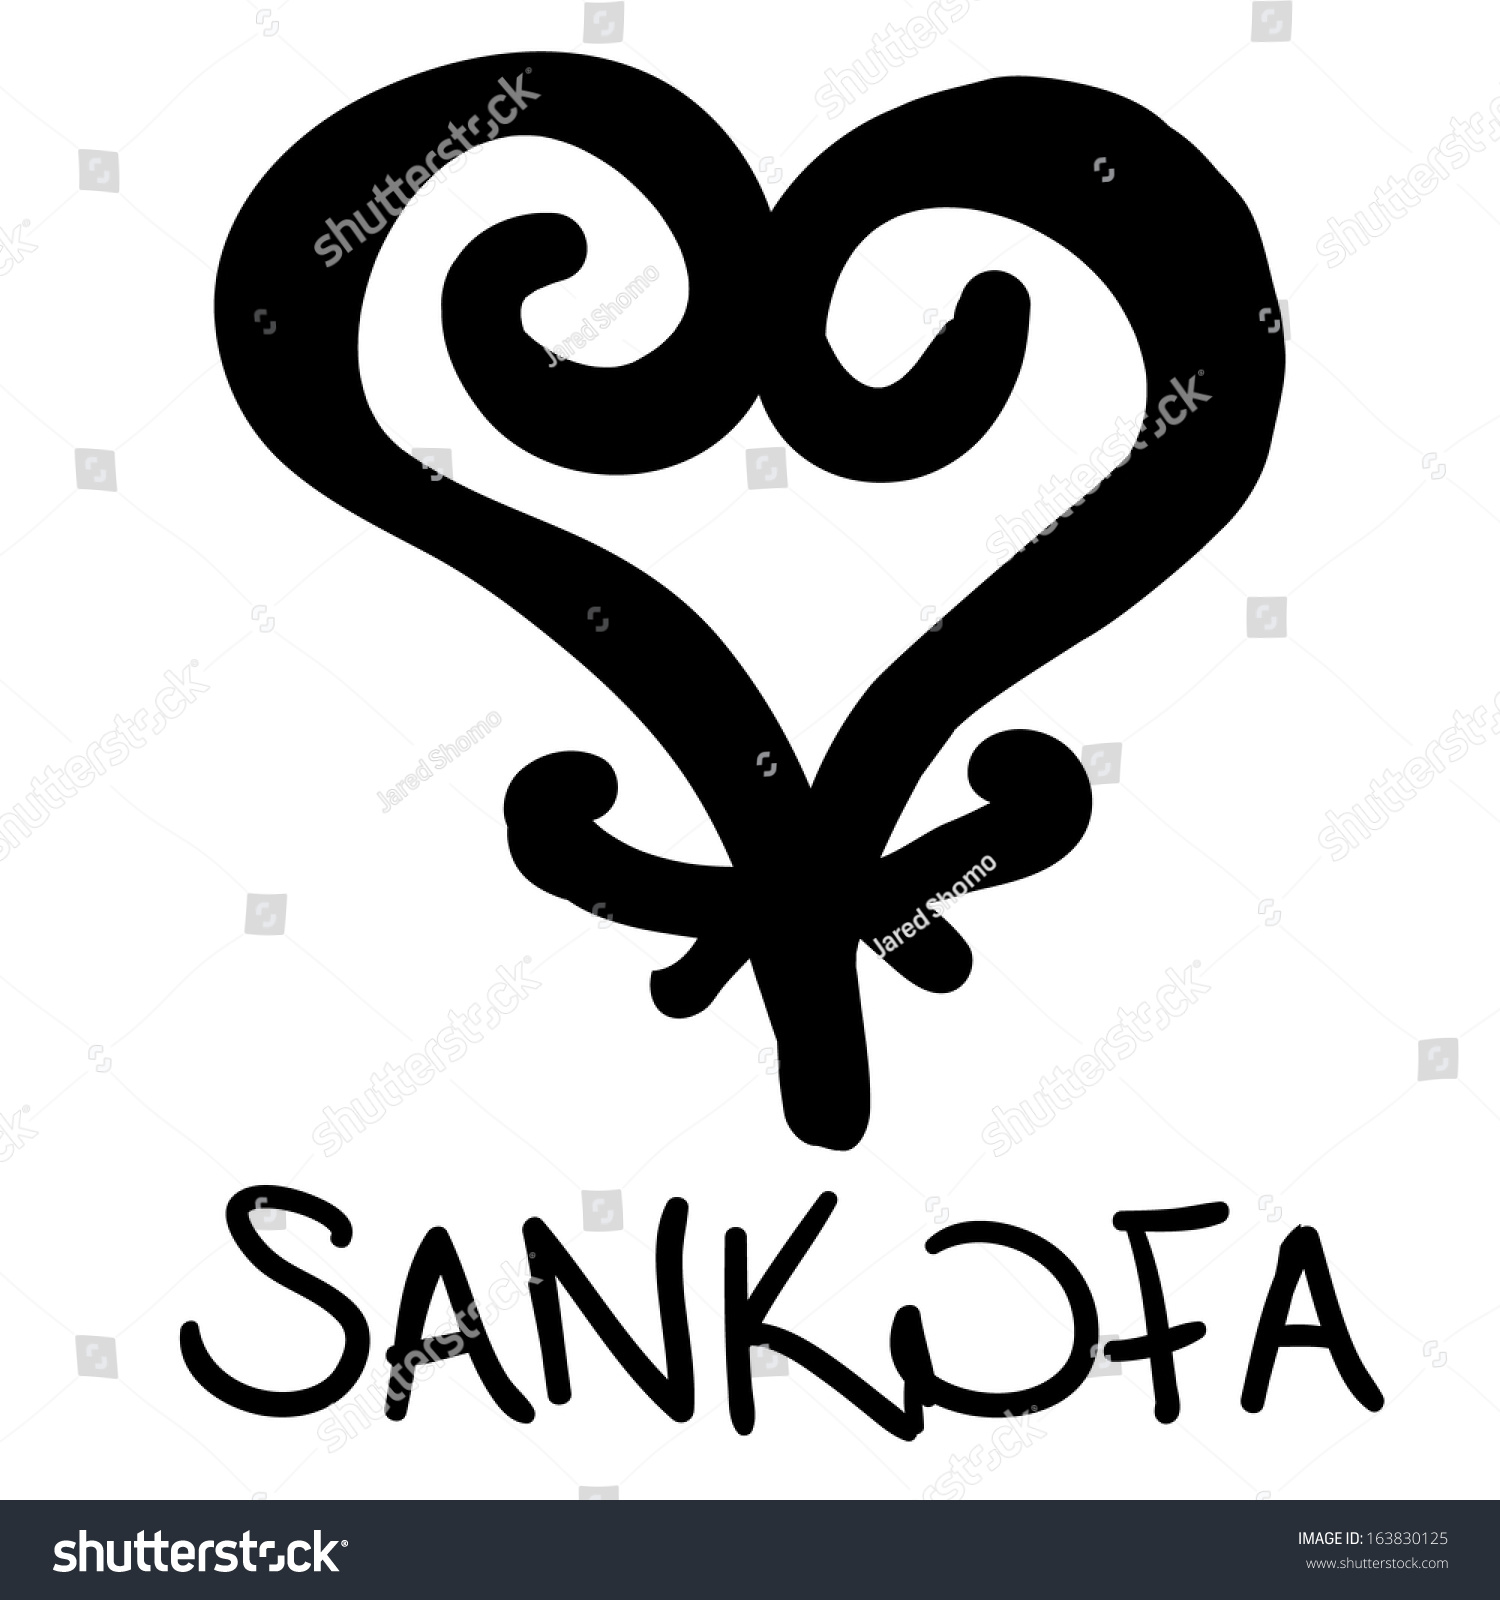 Sankofa African Adinkra Symbol Vetor Stock Livre De Direitos 163830125 